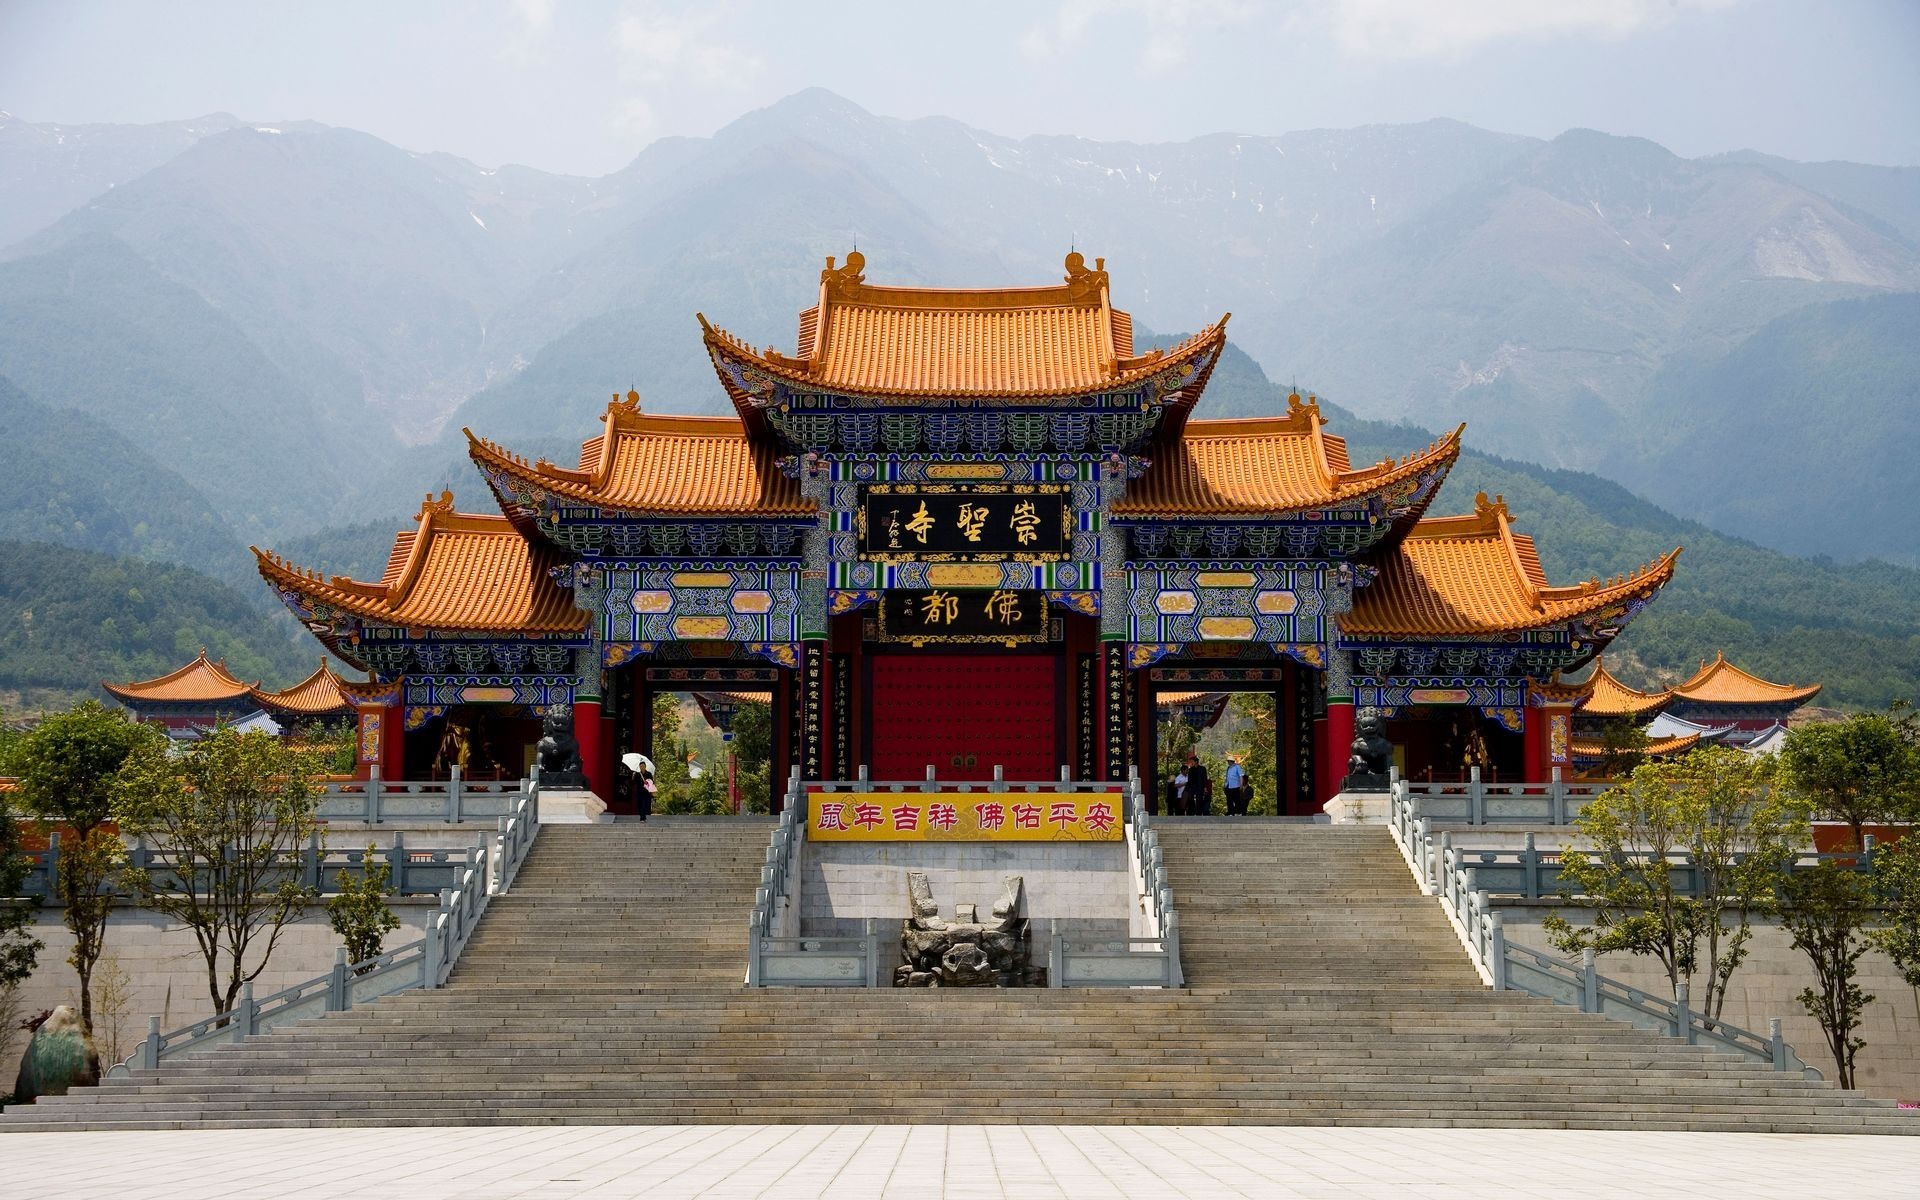 337906 Bild herunterladen religiös, chongsheng tempel, china, pagode, tempel - Hintergrundbilder und Bildschirmschoner kostenlos